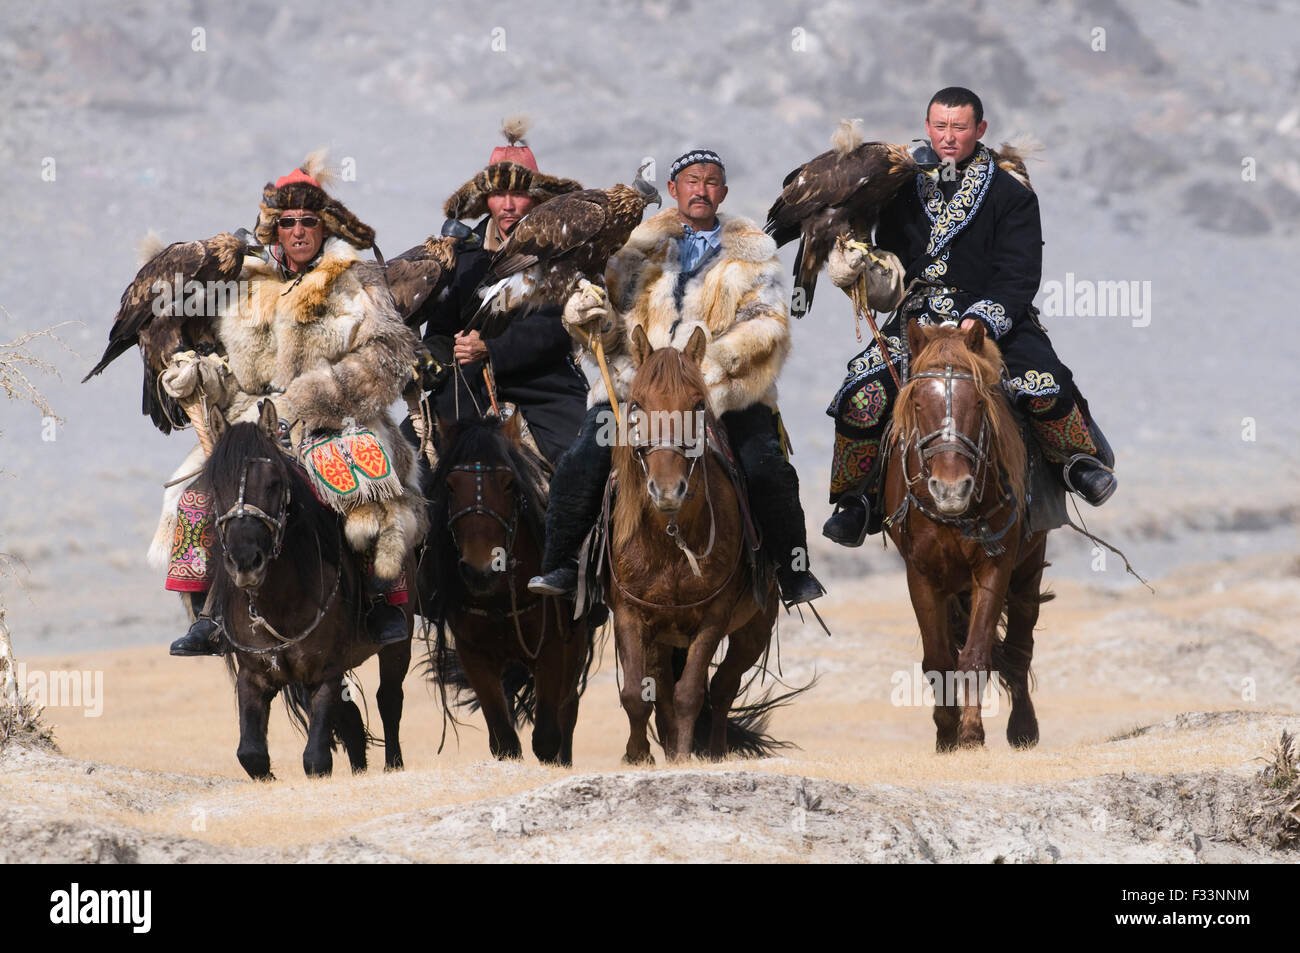 Eagle cazadores en ruta hacia el festival Eagle cazadores cerca Ulgii en Mongolia occidental, Octubre Foto de stock